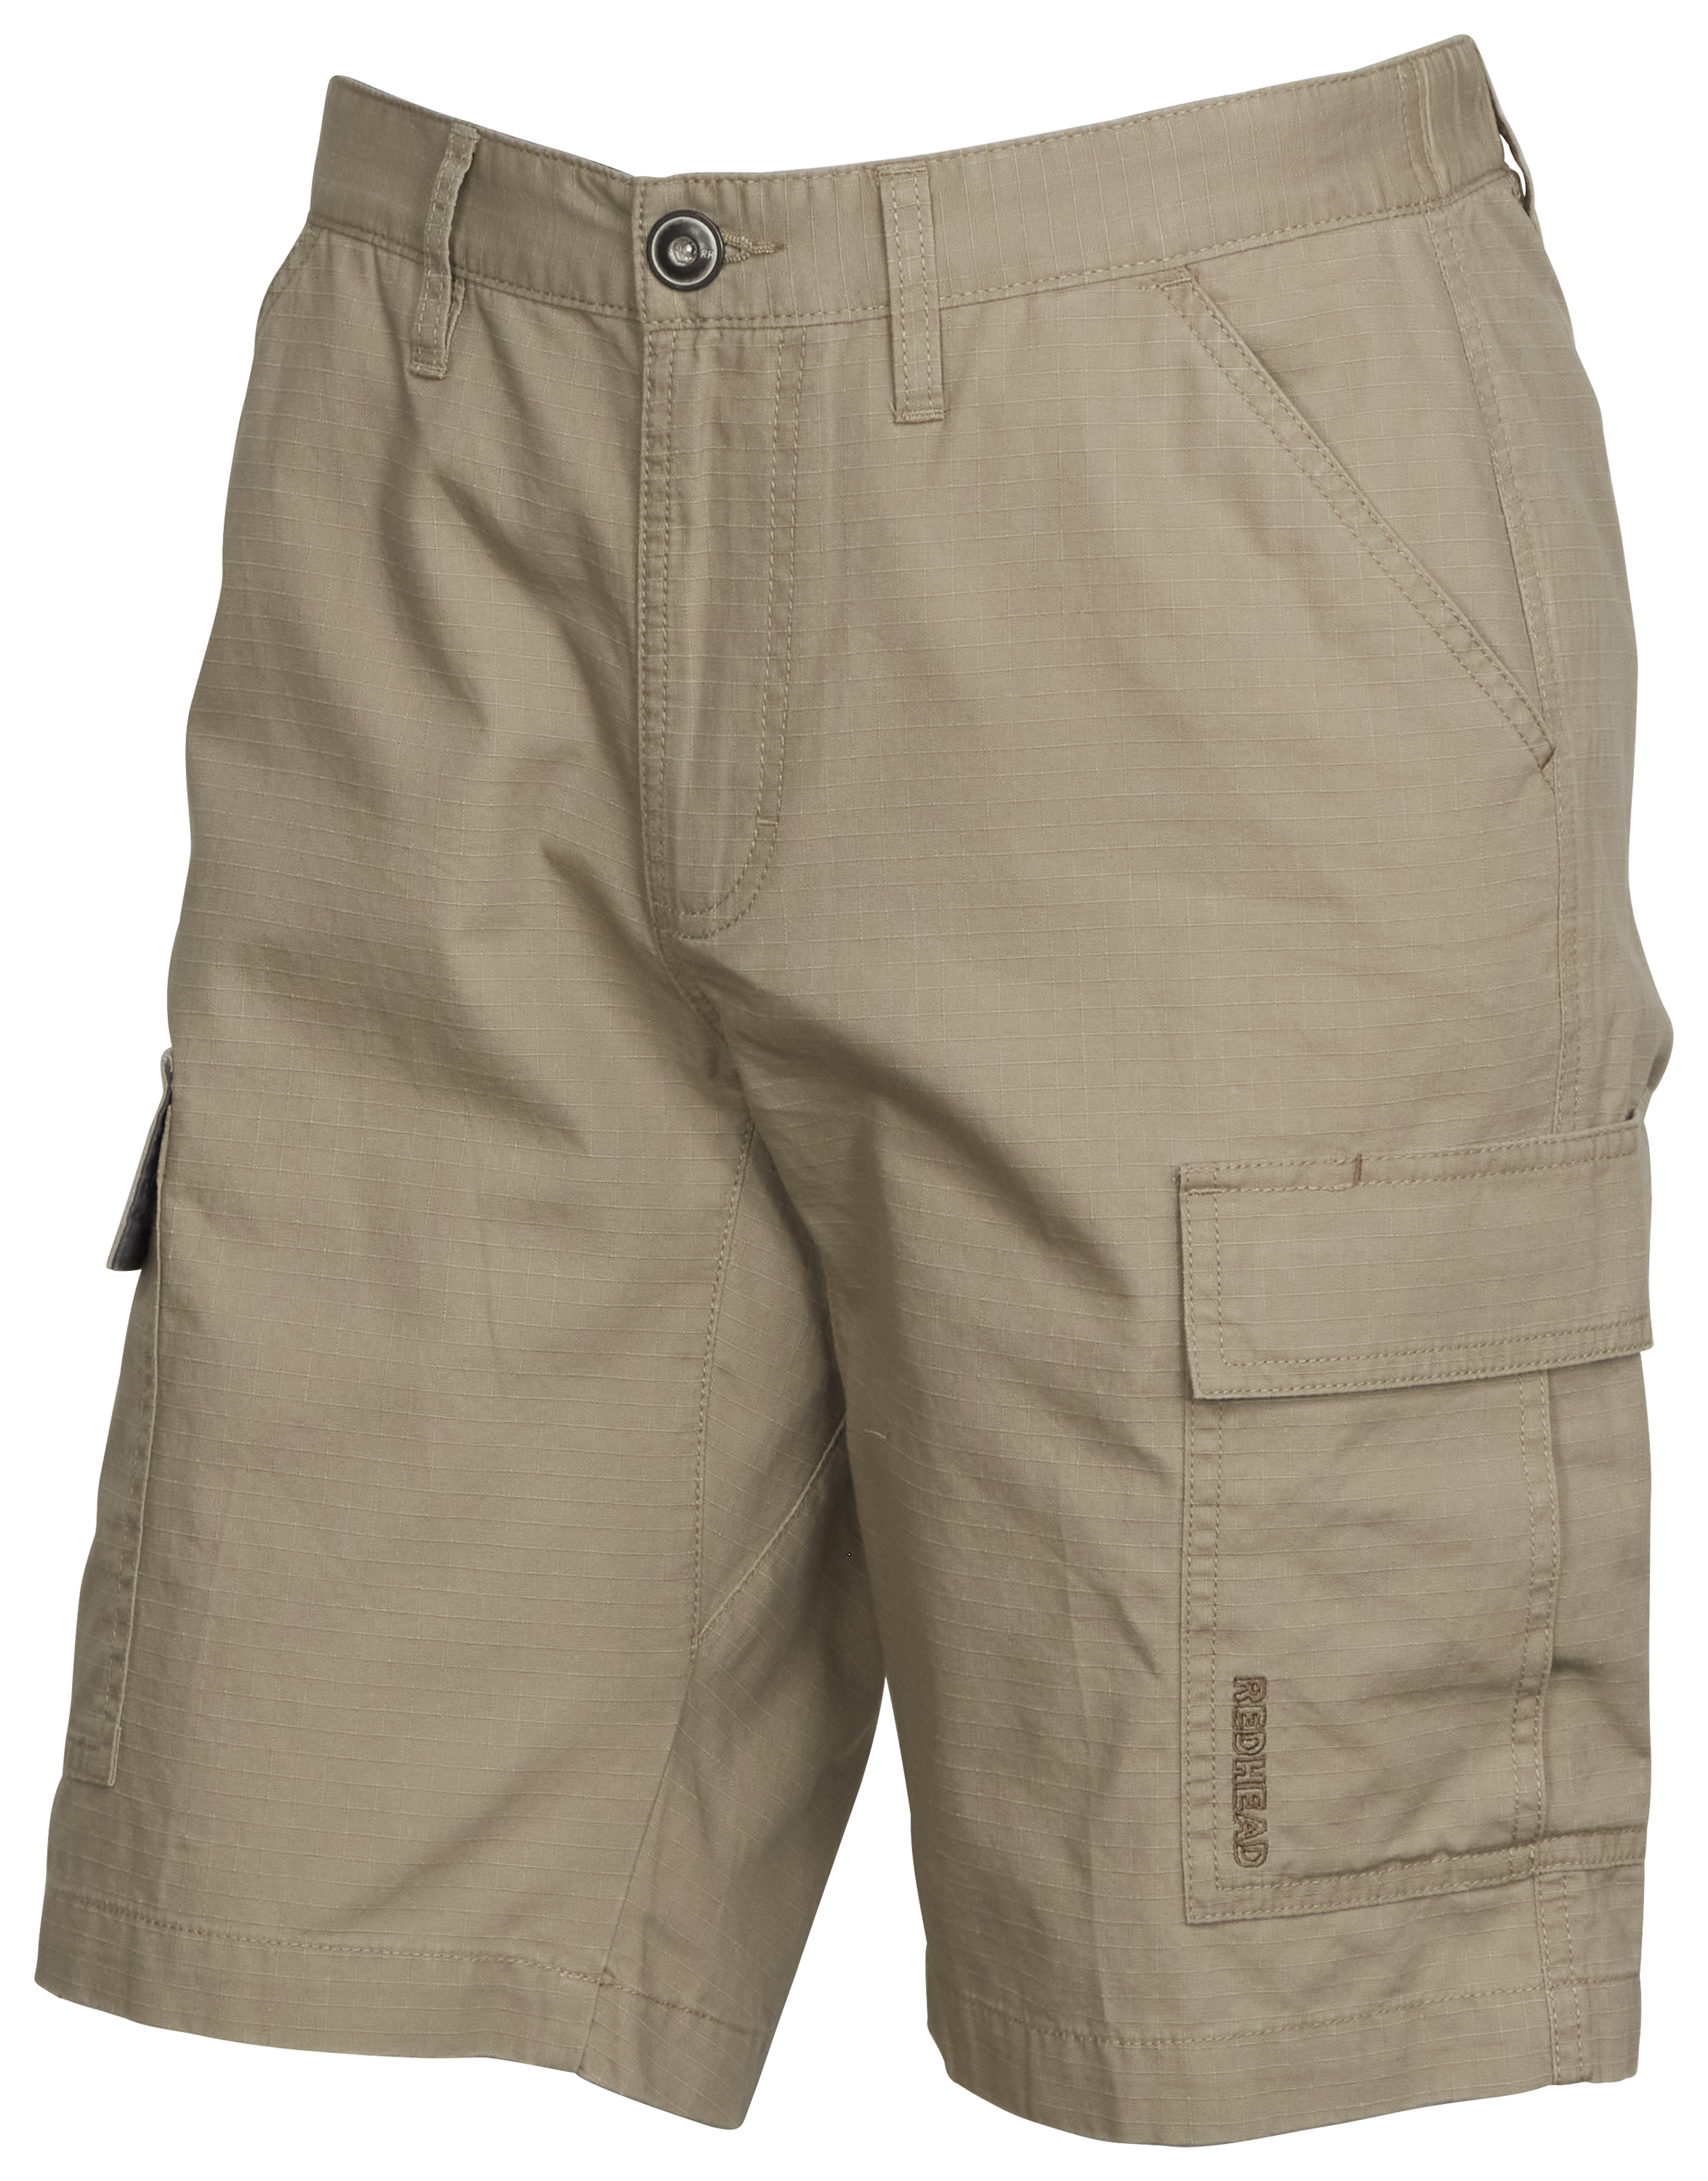 RedHead Stockton Cargo Shorts for Men